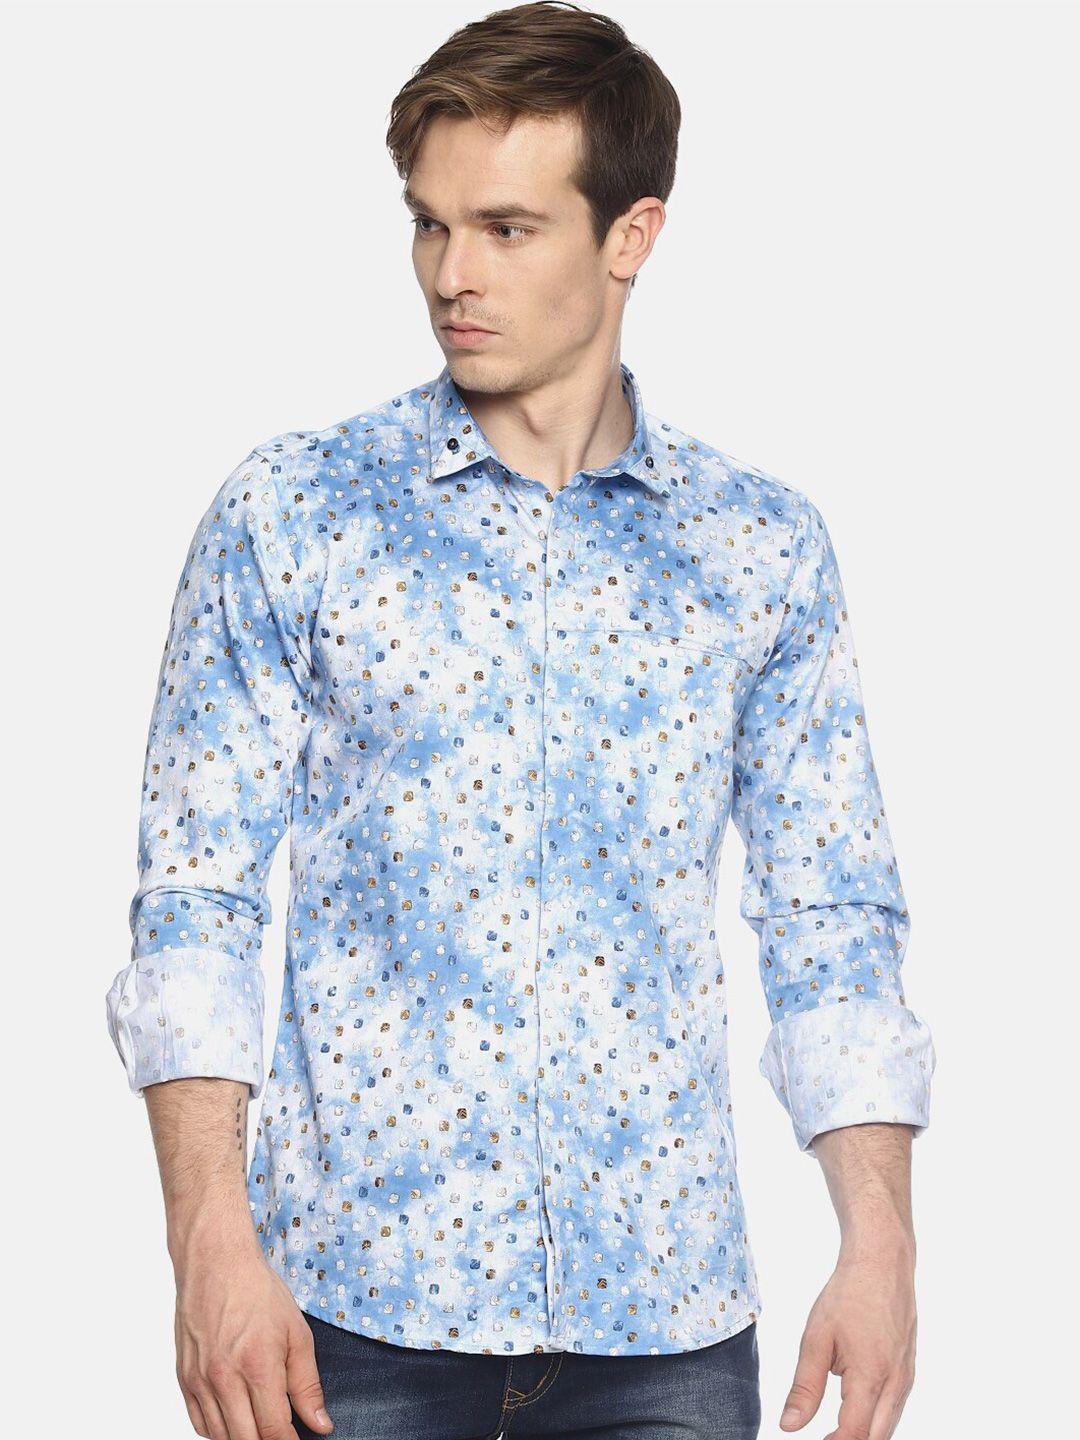 couper & coll men blue premium slim fit floral printed casual shirt